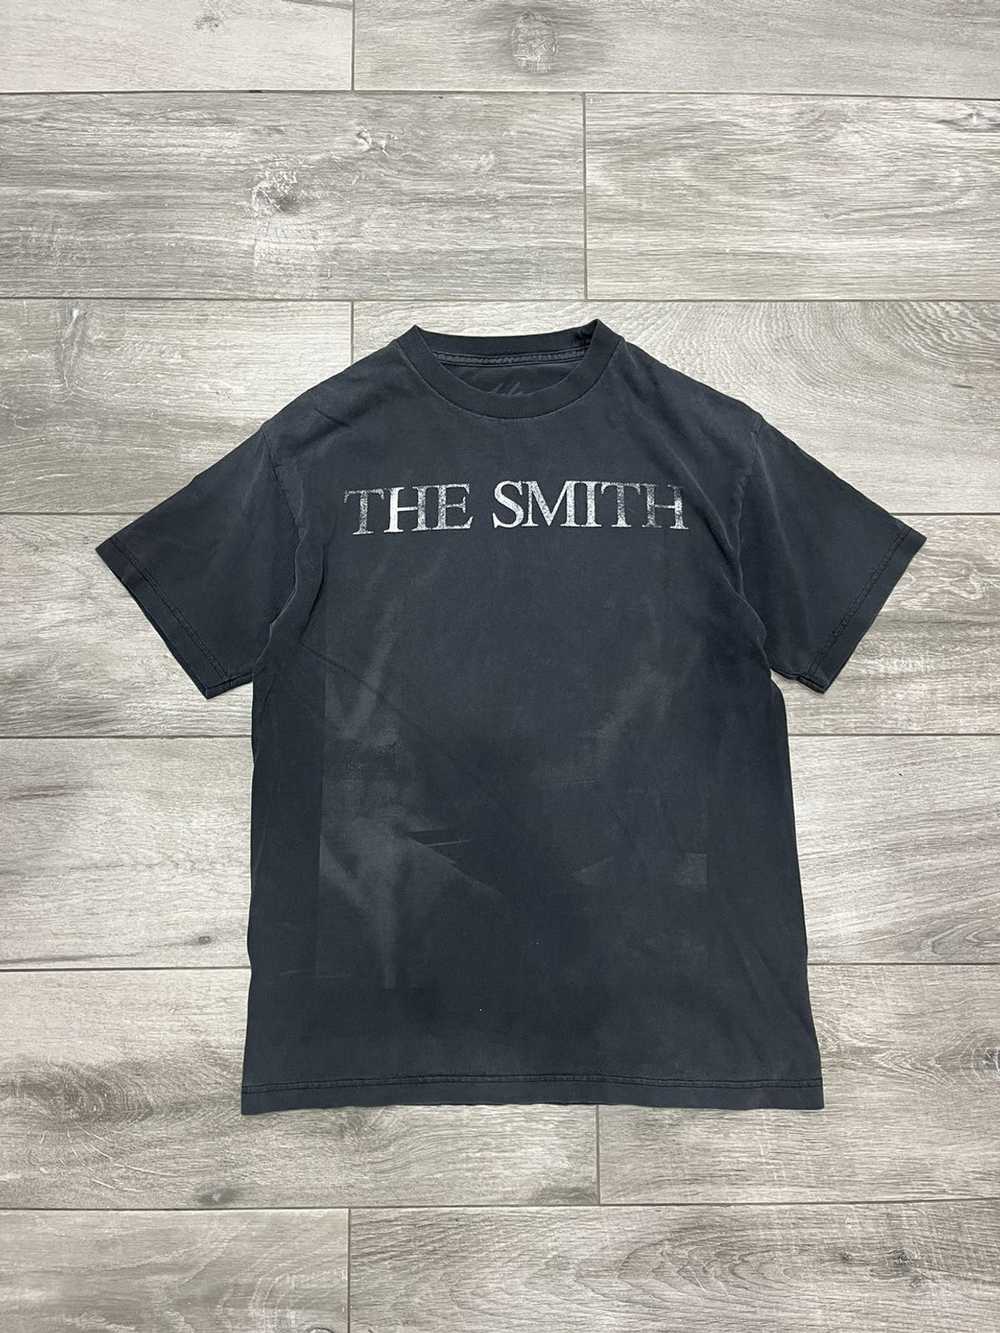 Vintage Vintage “The Smiths” Tee - image 1